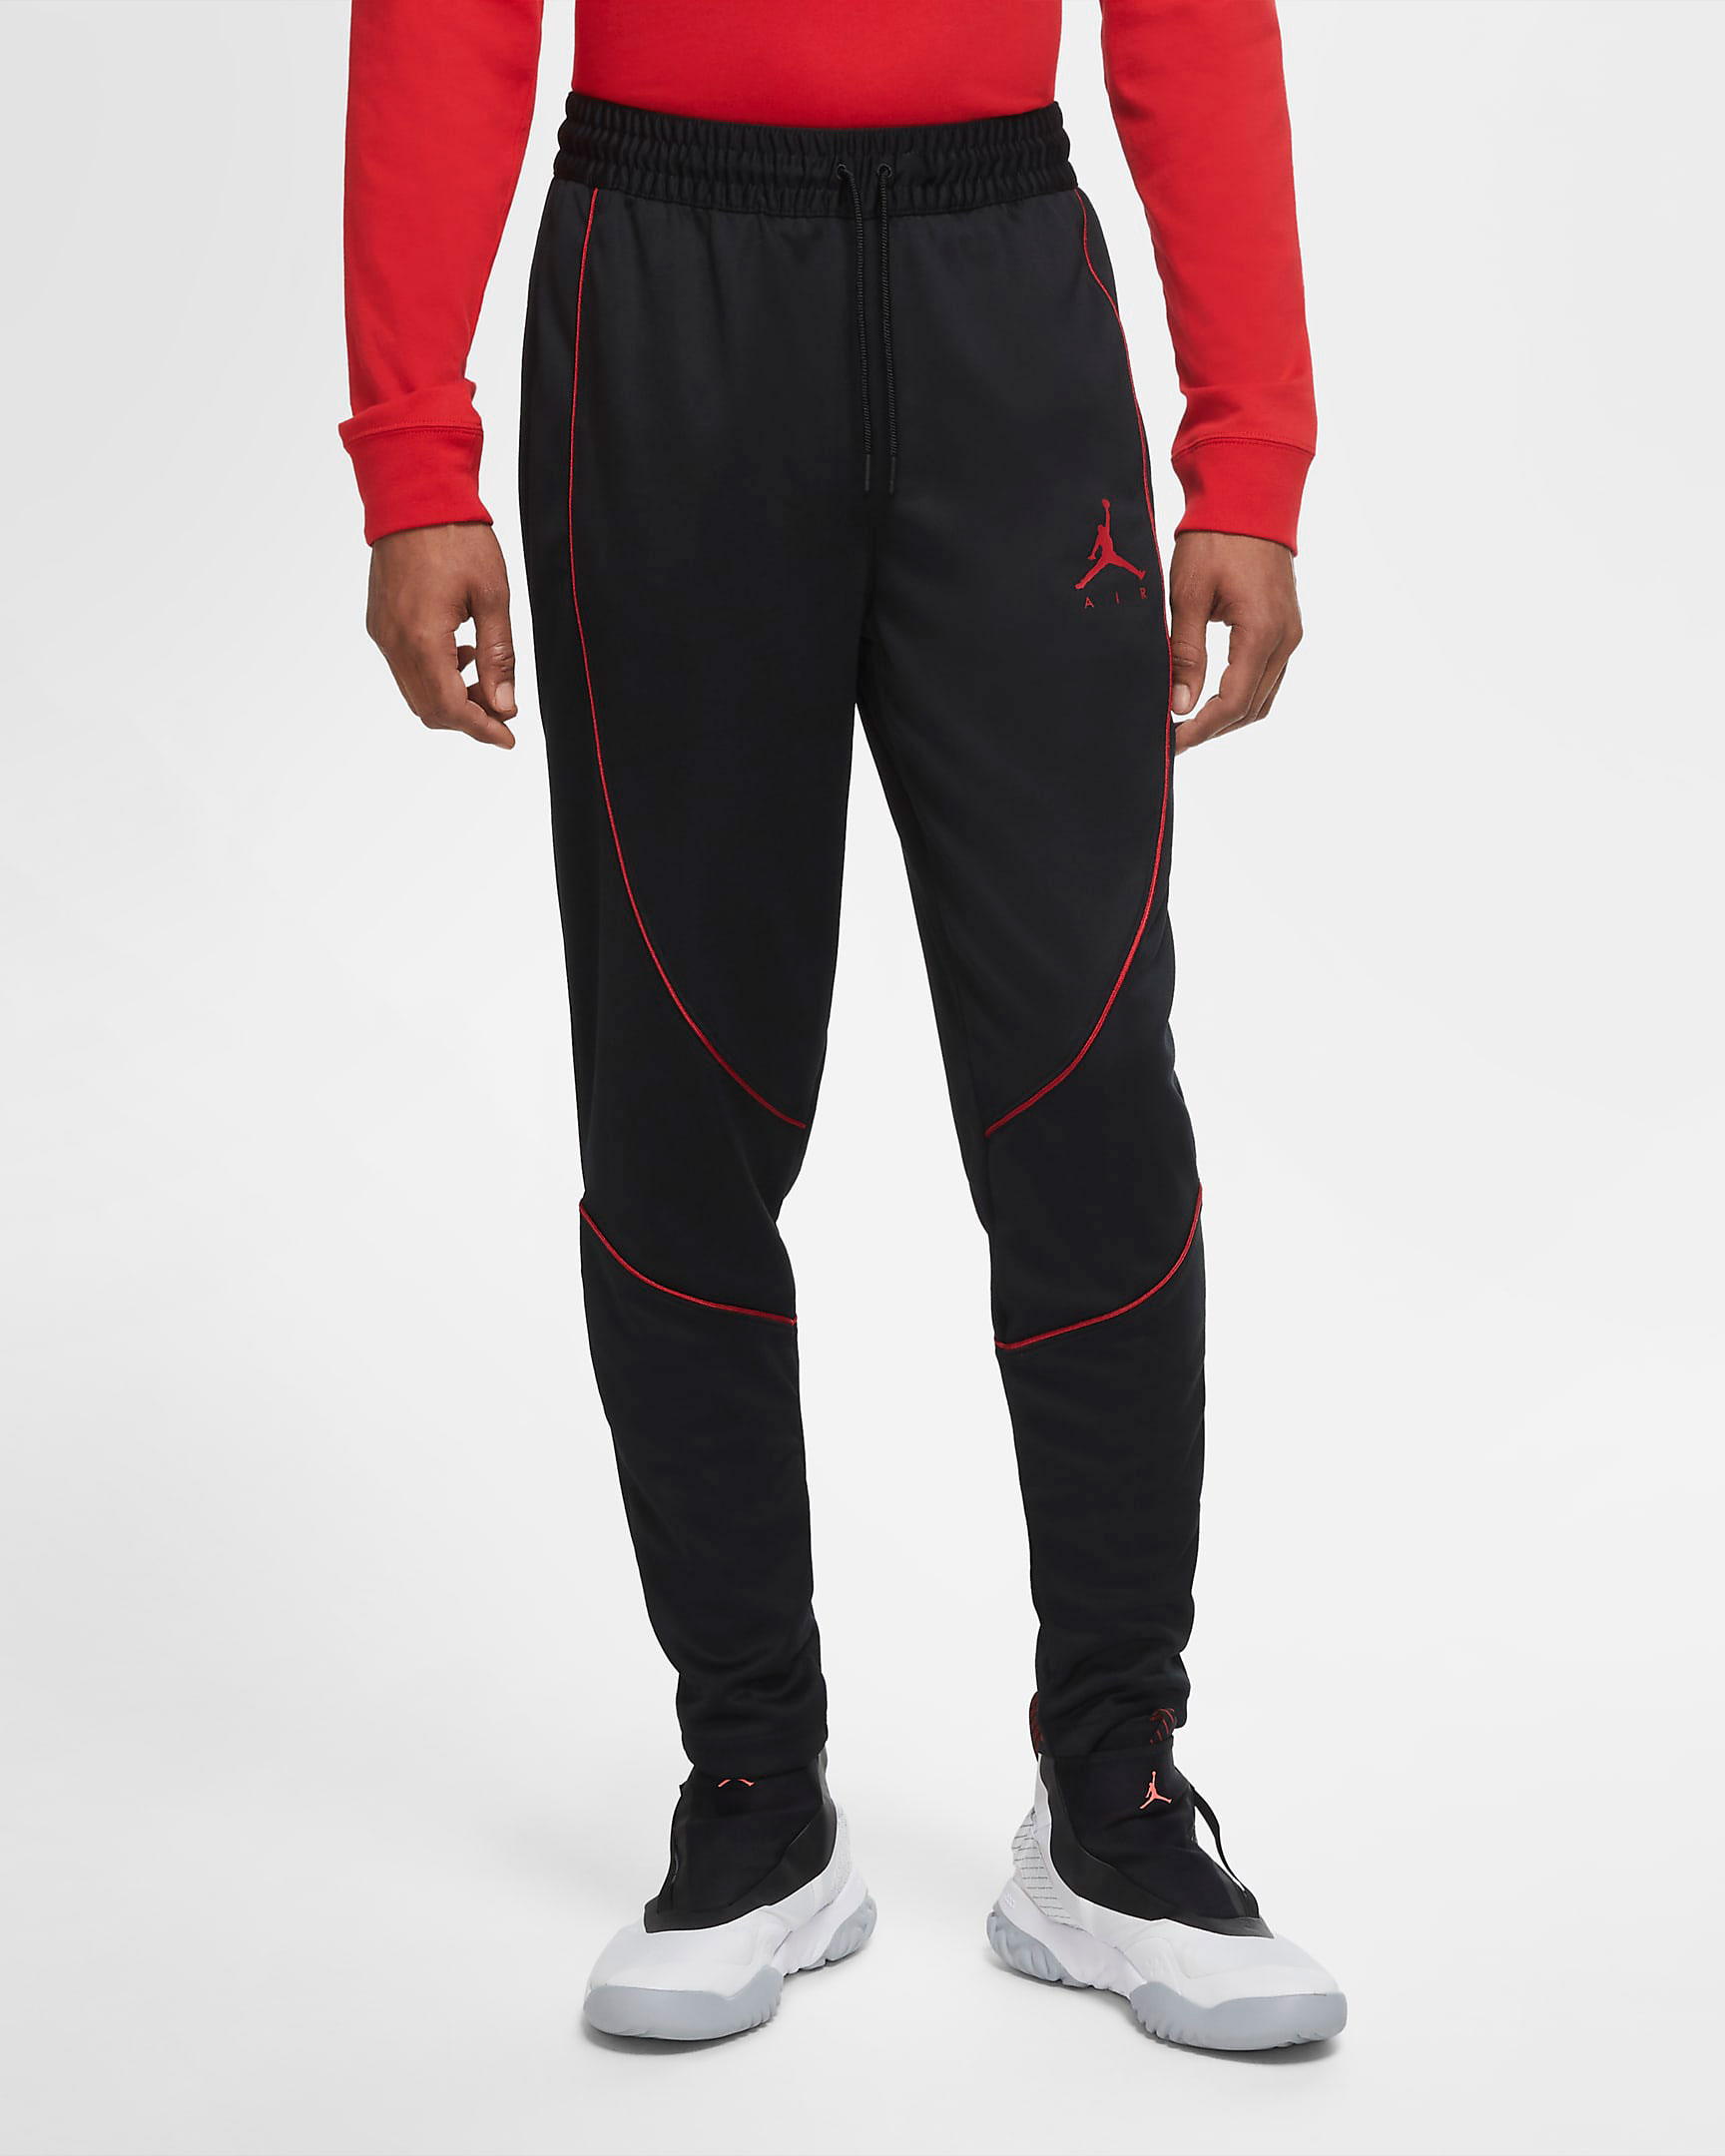 New Jordan Brand Apparel for Fall 2020 